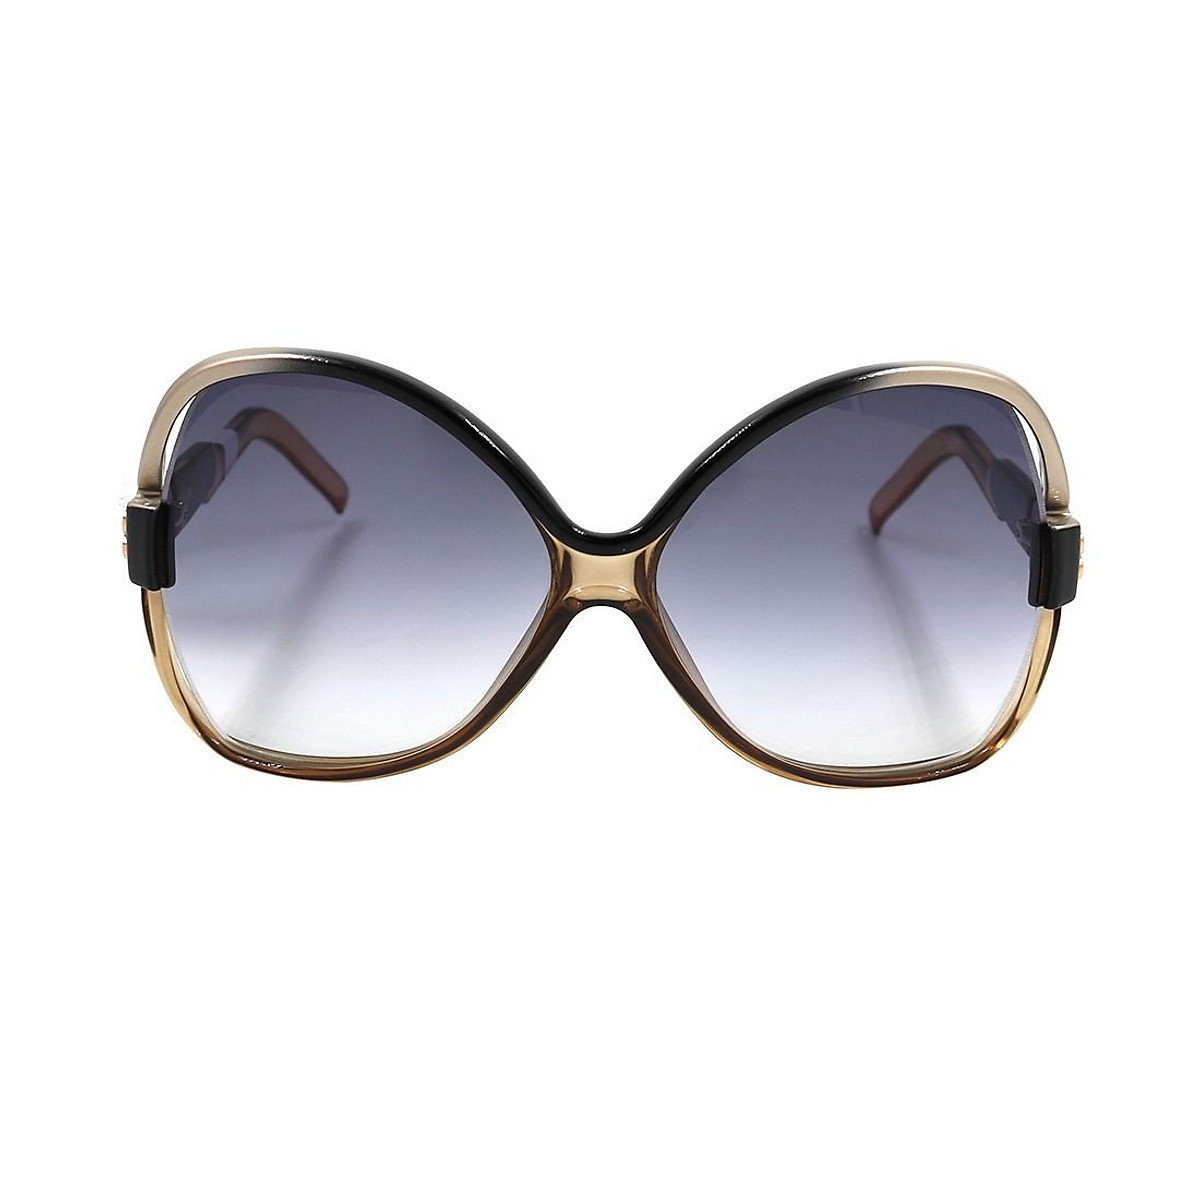 Kính Balenciaga Grey Square Unisex Sunglasses BB0018SK 001 56